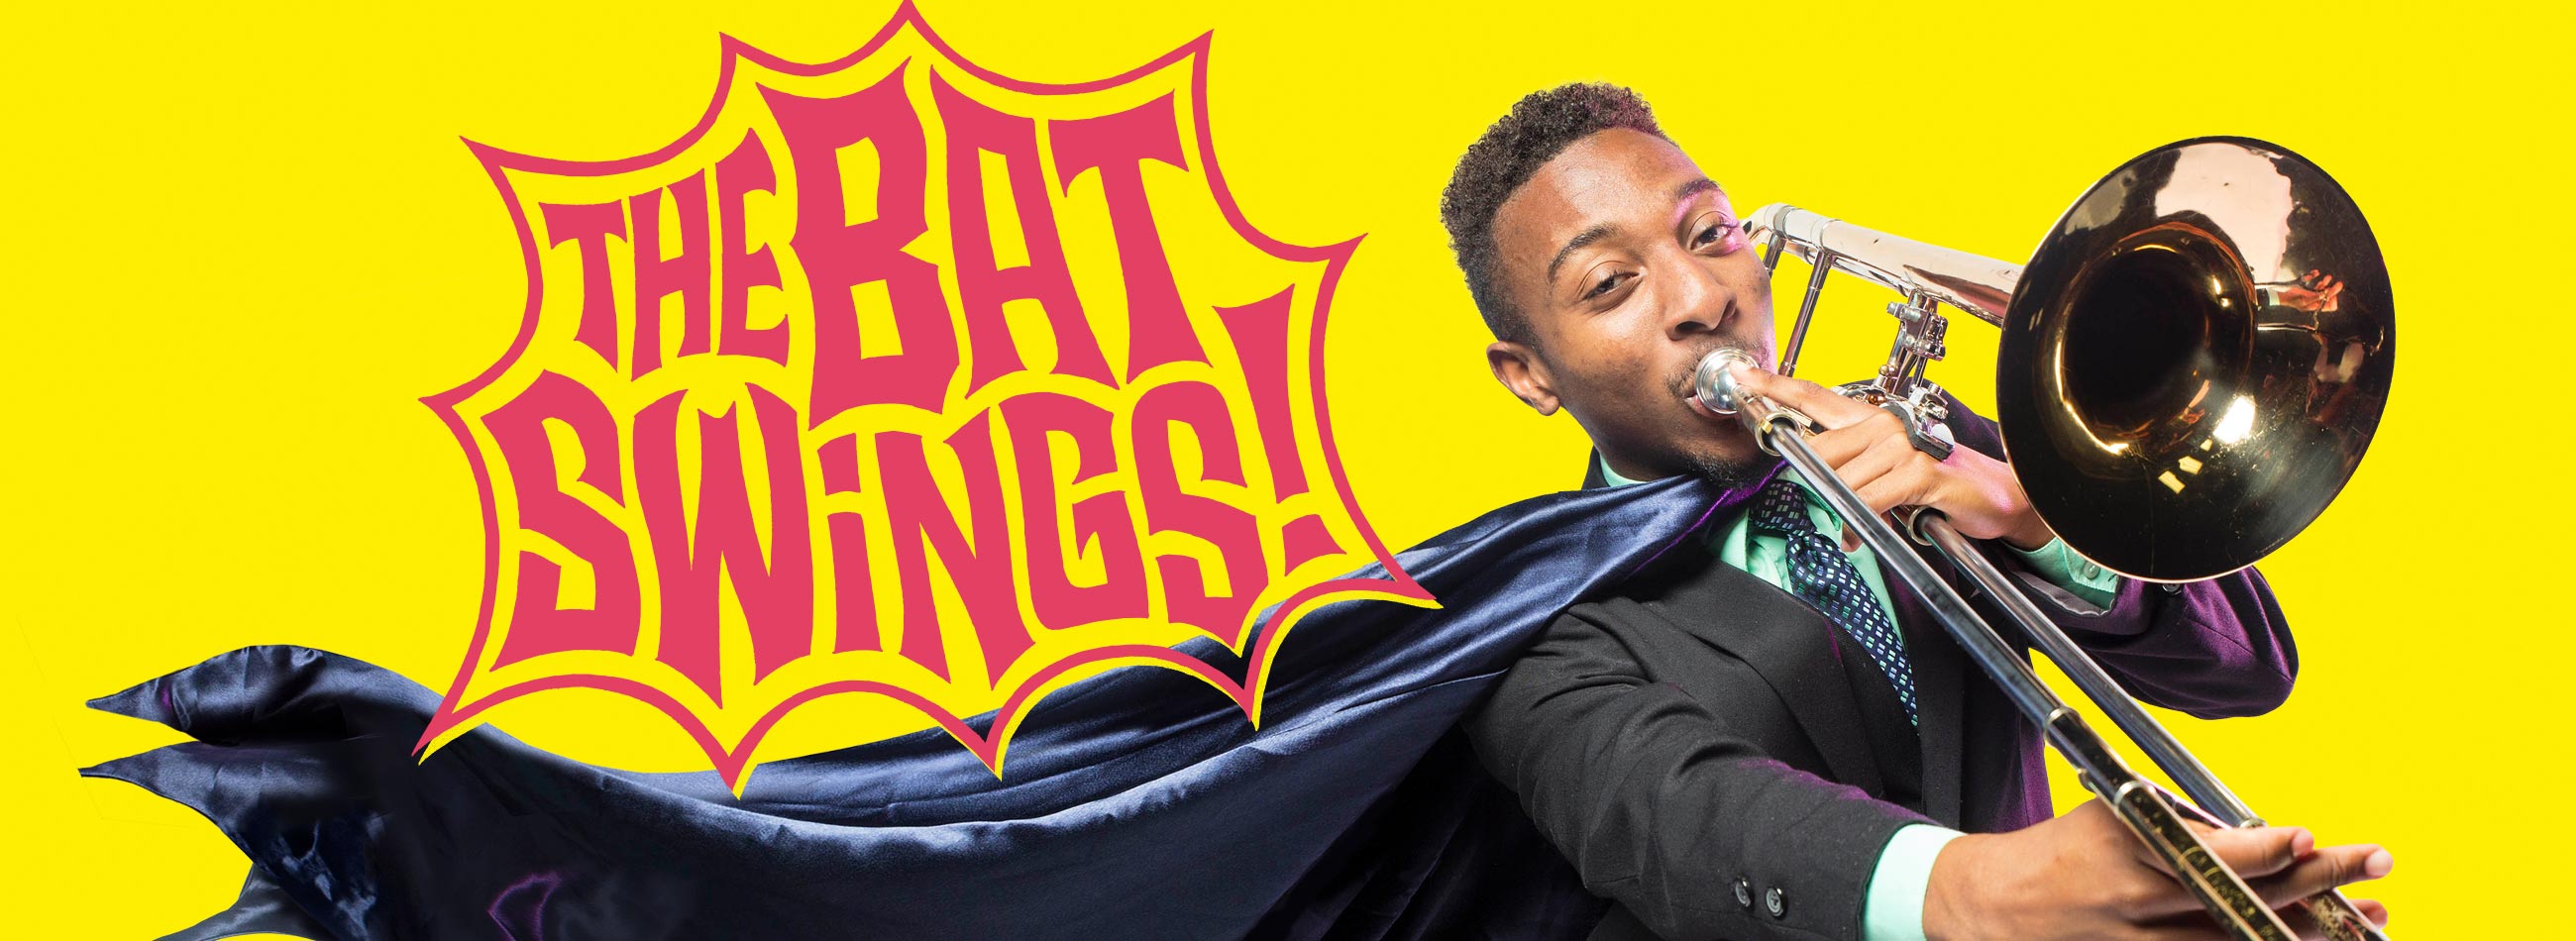 The Bat Swings! logo appears with trombone player wearing a cape